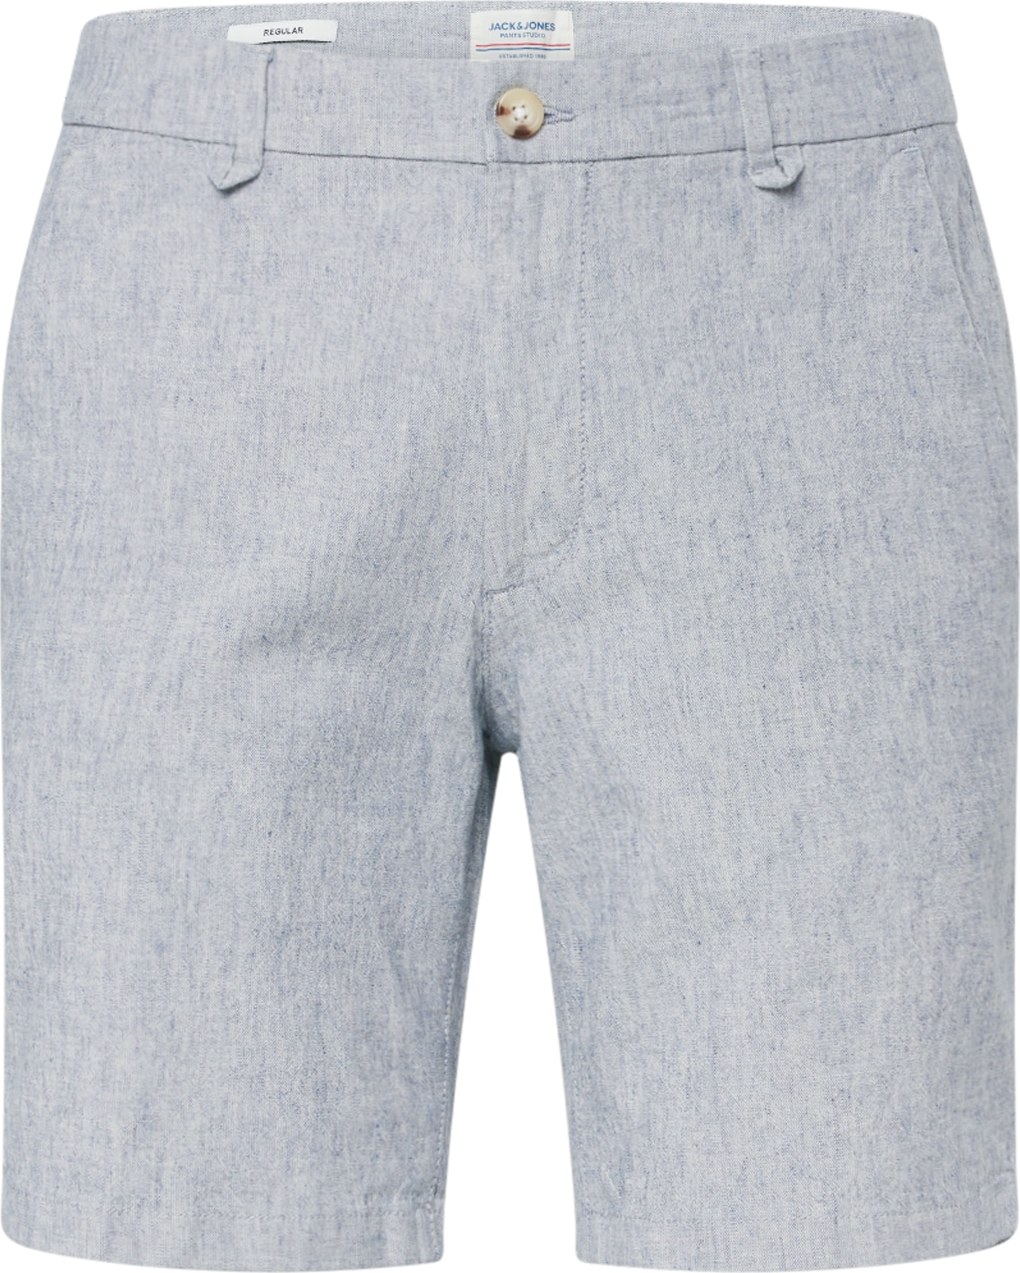 Chino kalhoty 'Palma' jack & jones chladná modrá